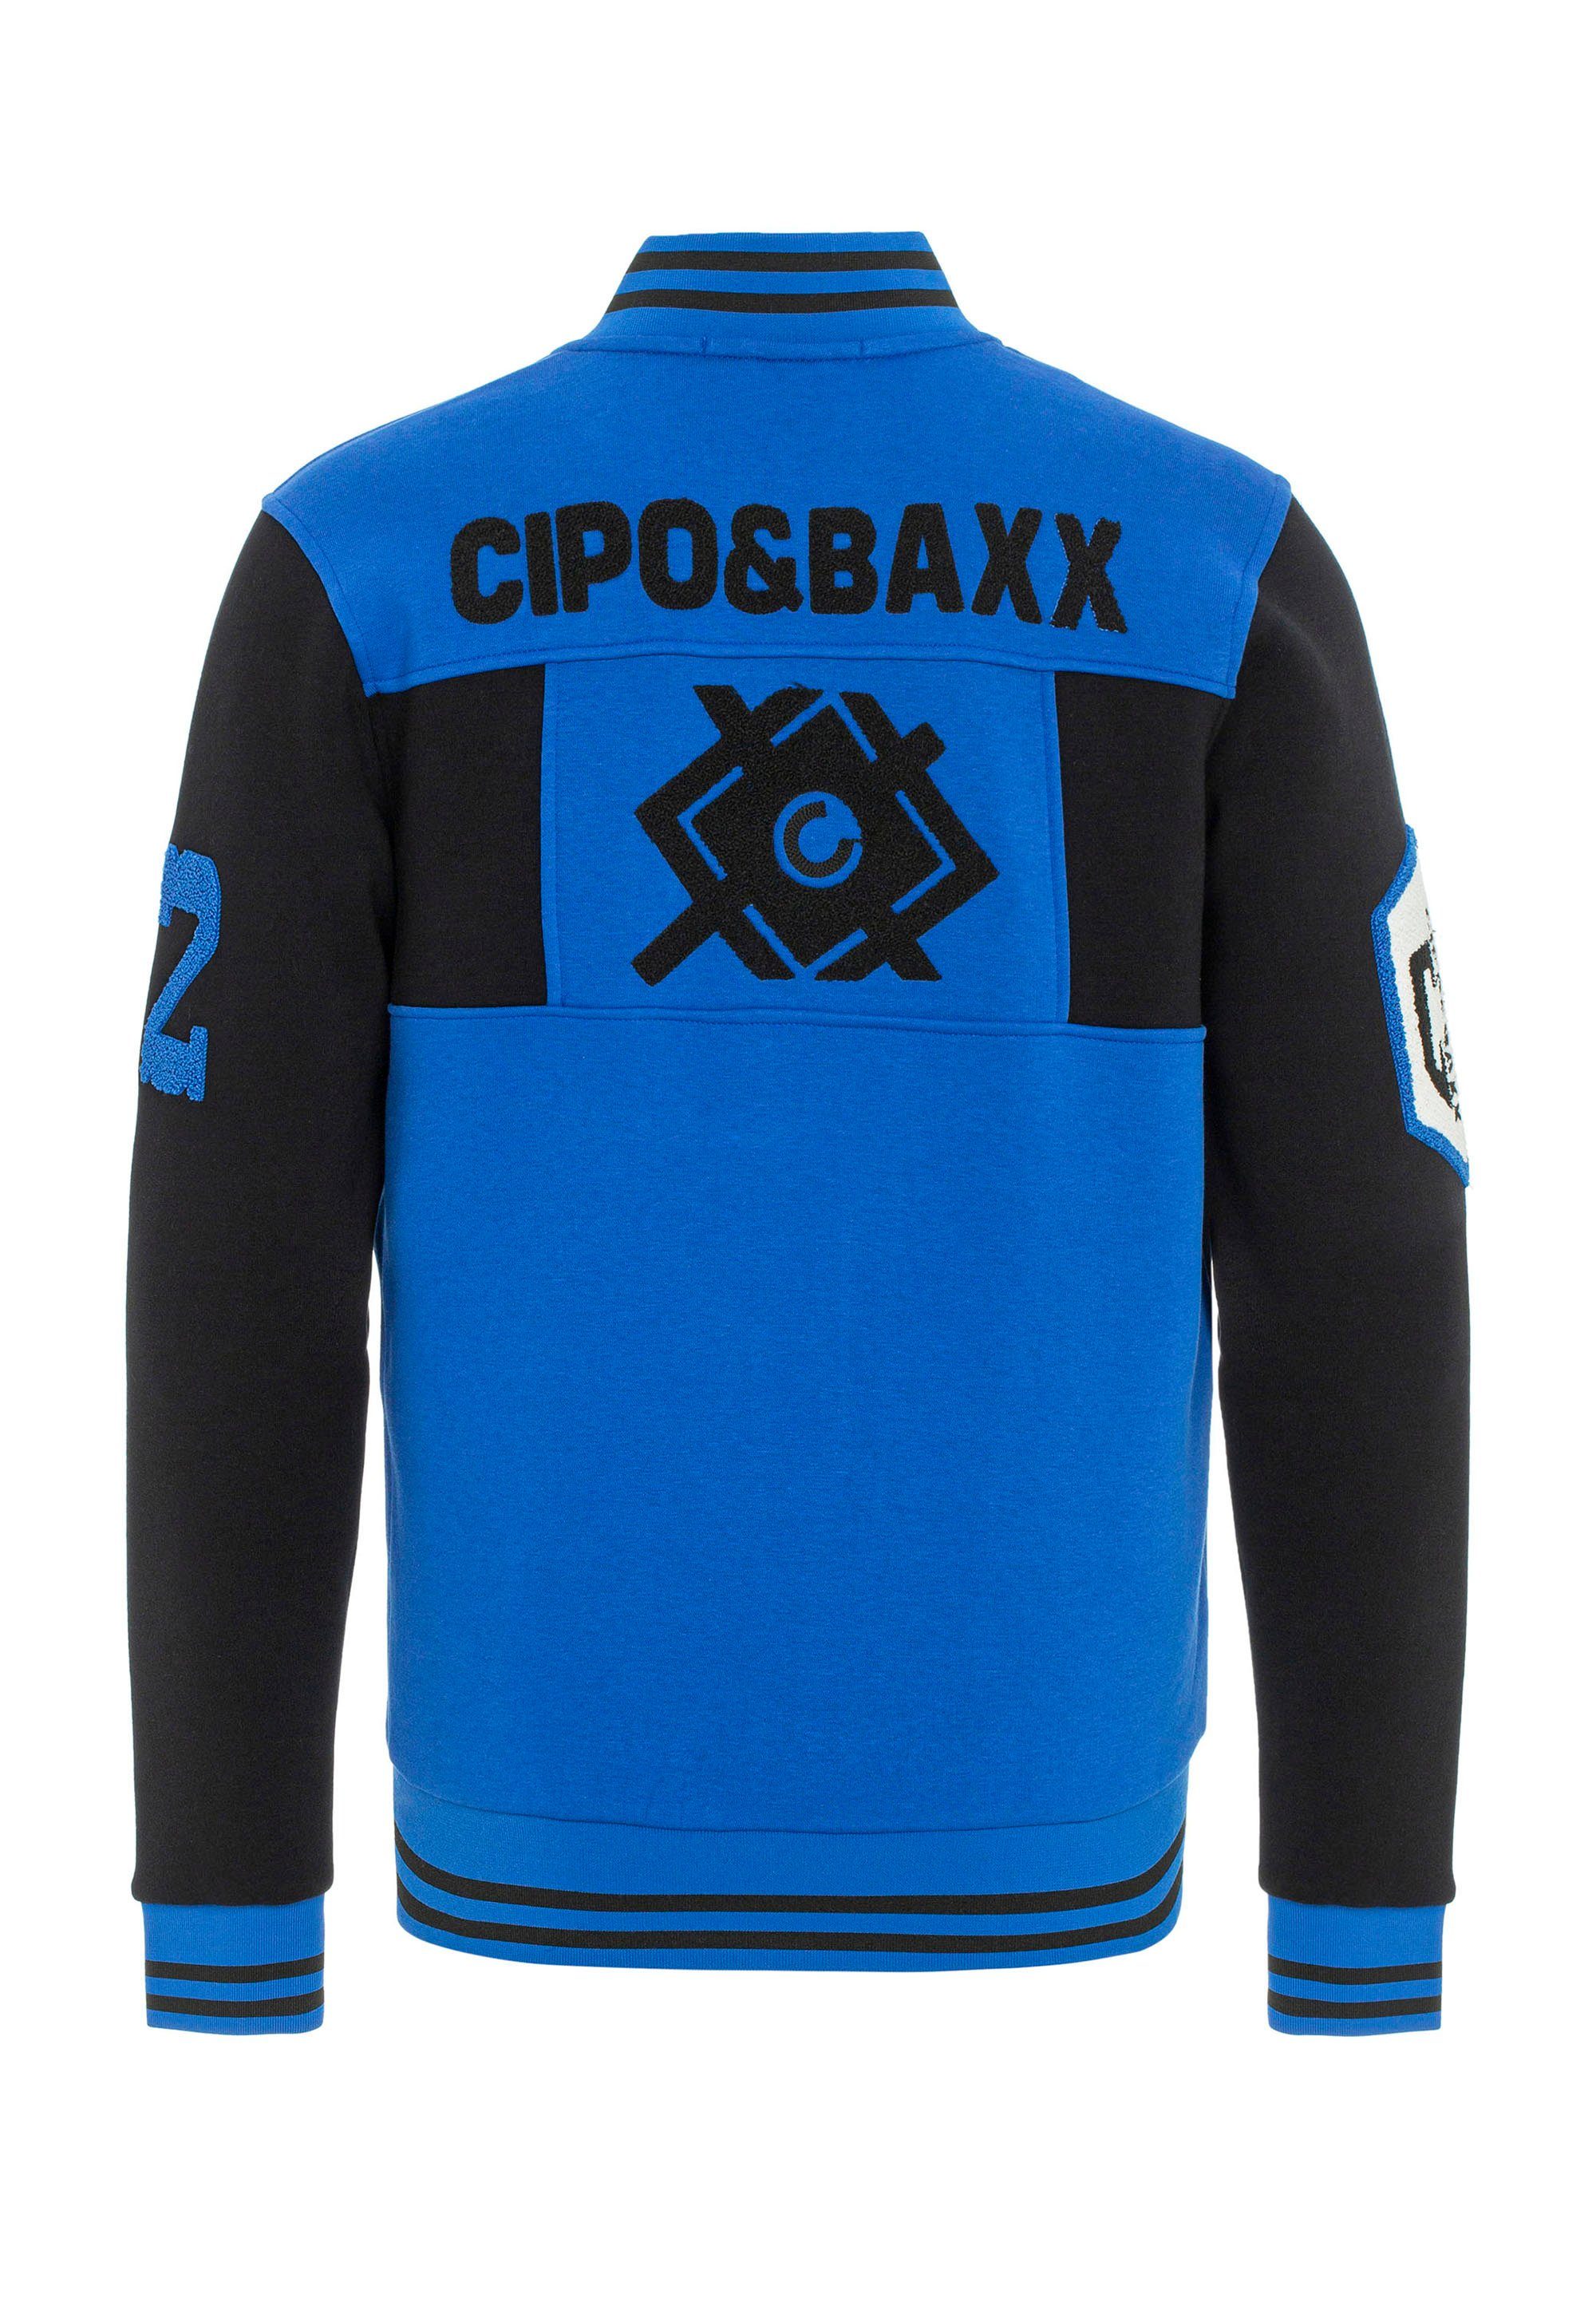 Cipo & Baxx Sweatjacke in sportlichem blau-schwarz Design